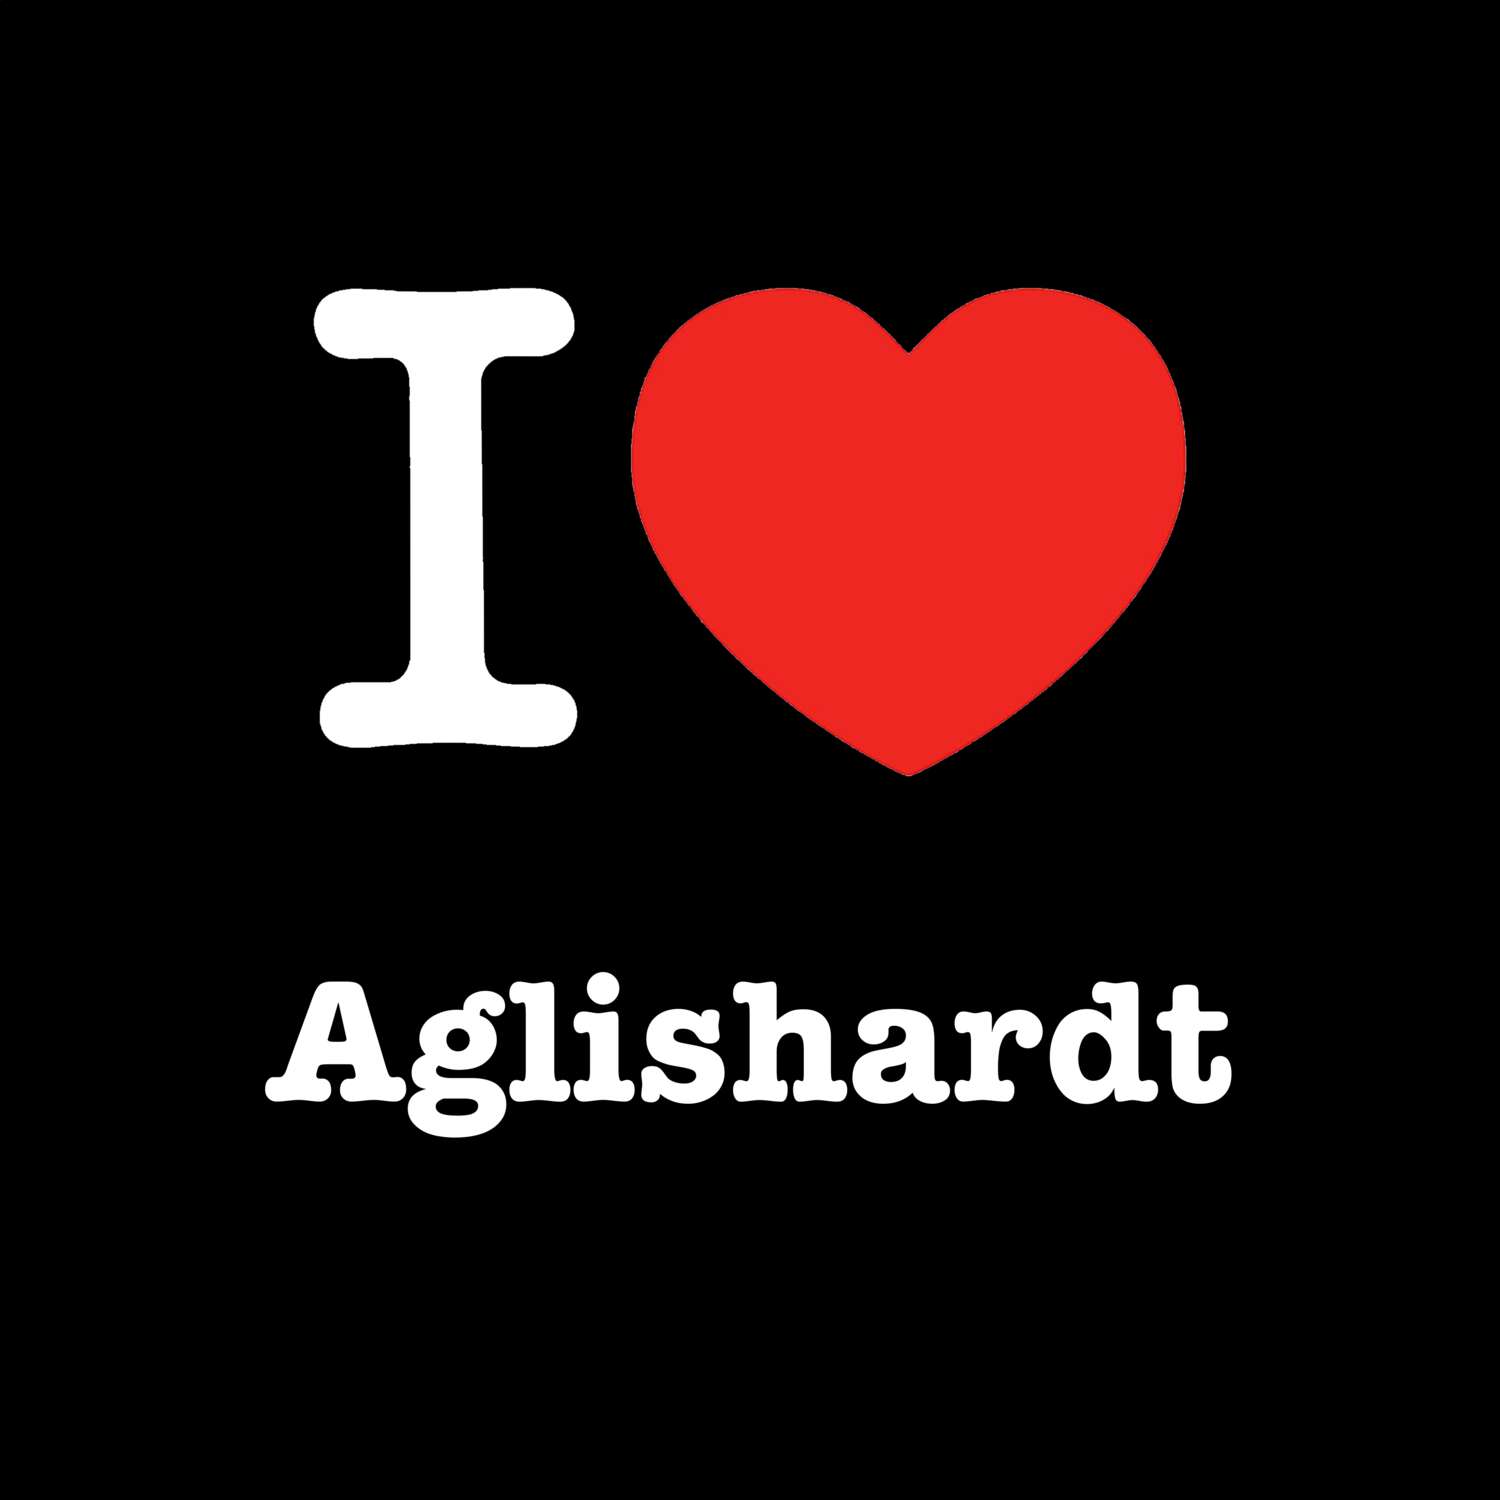 Aglishardt T-Shirt »I love«